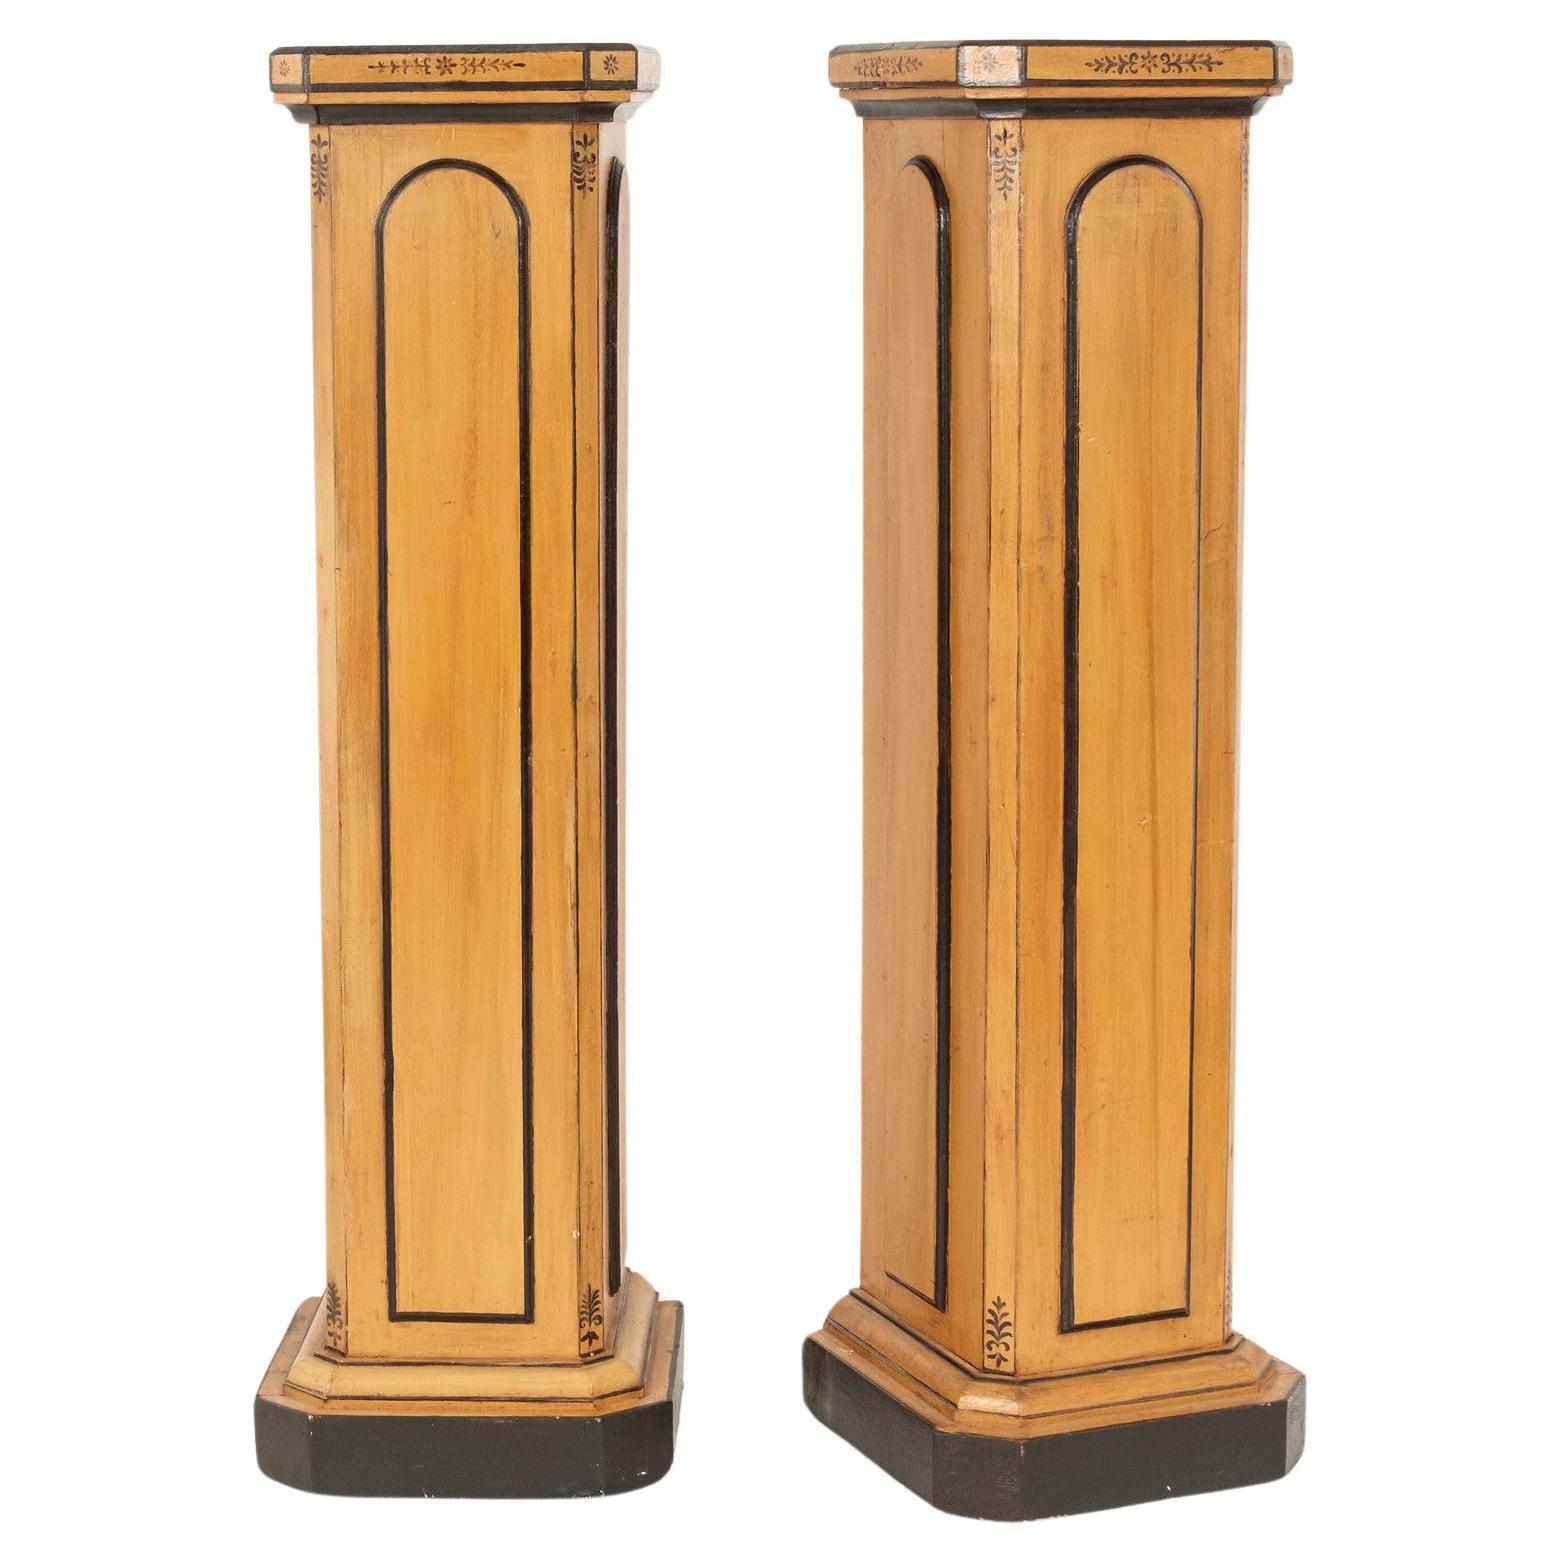 Pair 19th Century Painted Charles X Column Pedestals